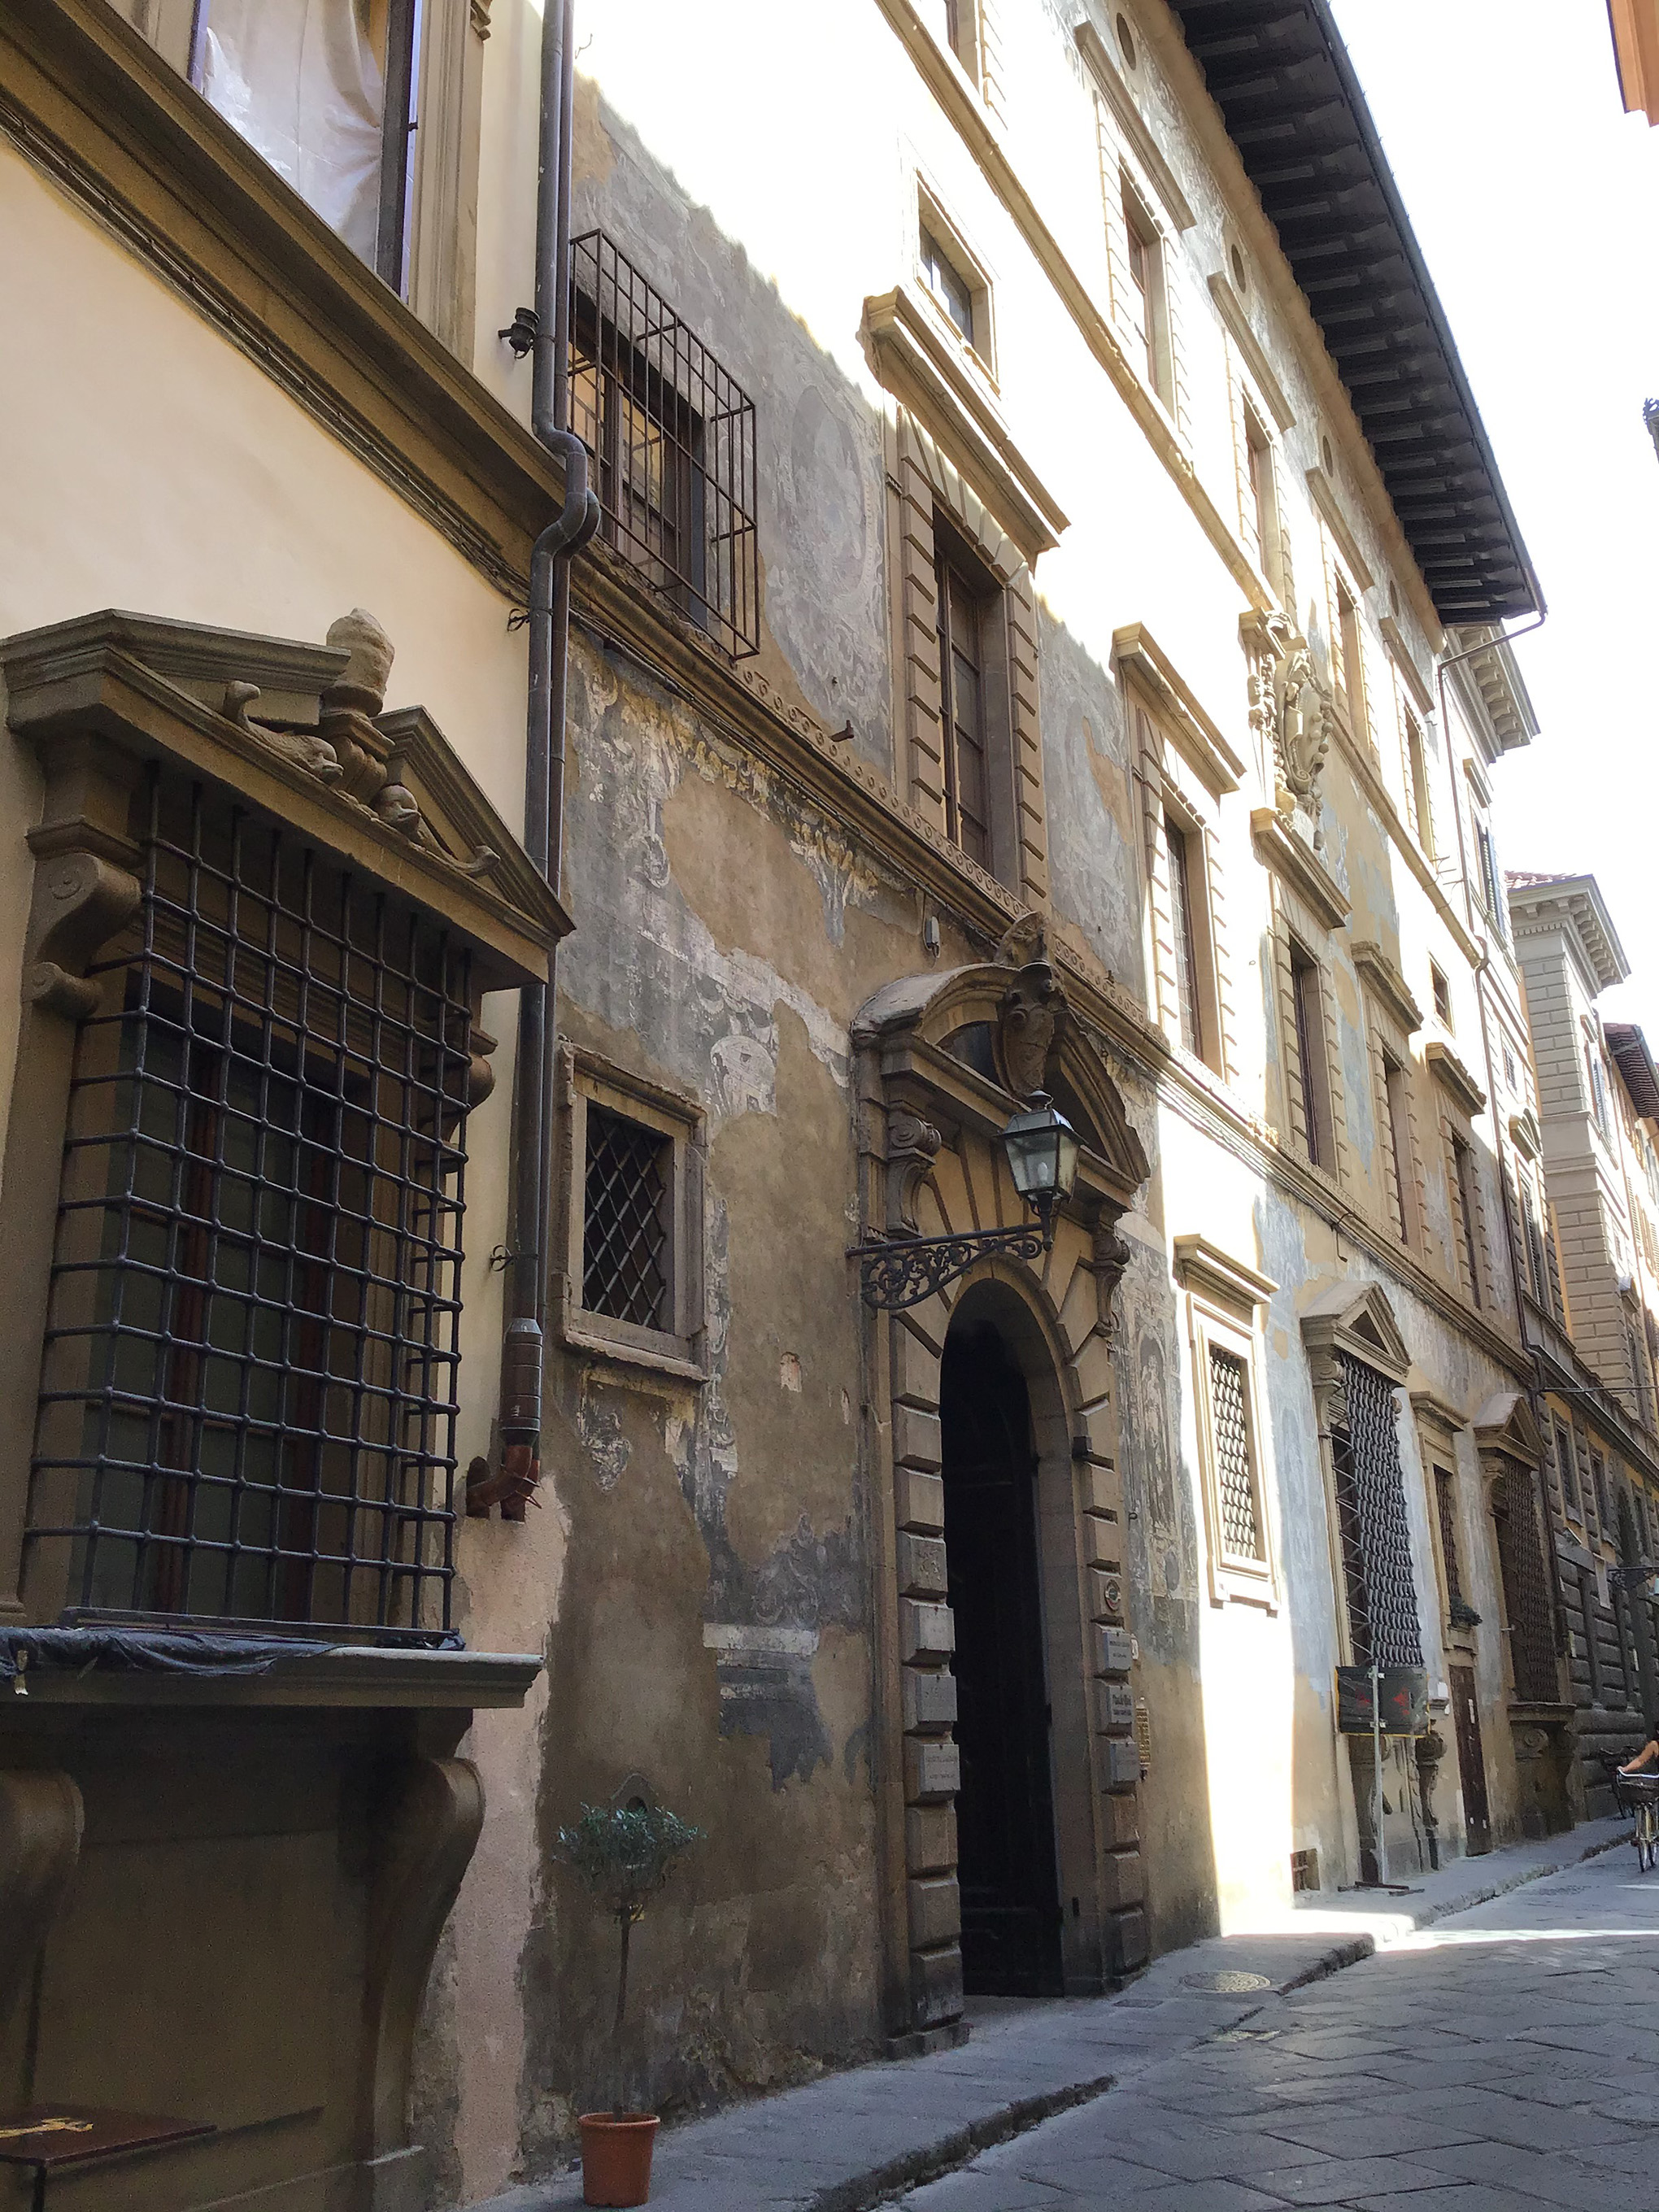 Palazzo Ramirez de Montalvo (palazzo, signorile) - Firenze (FI) 